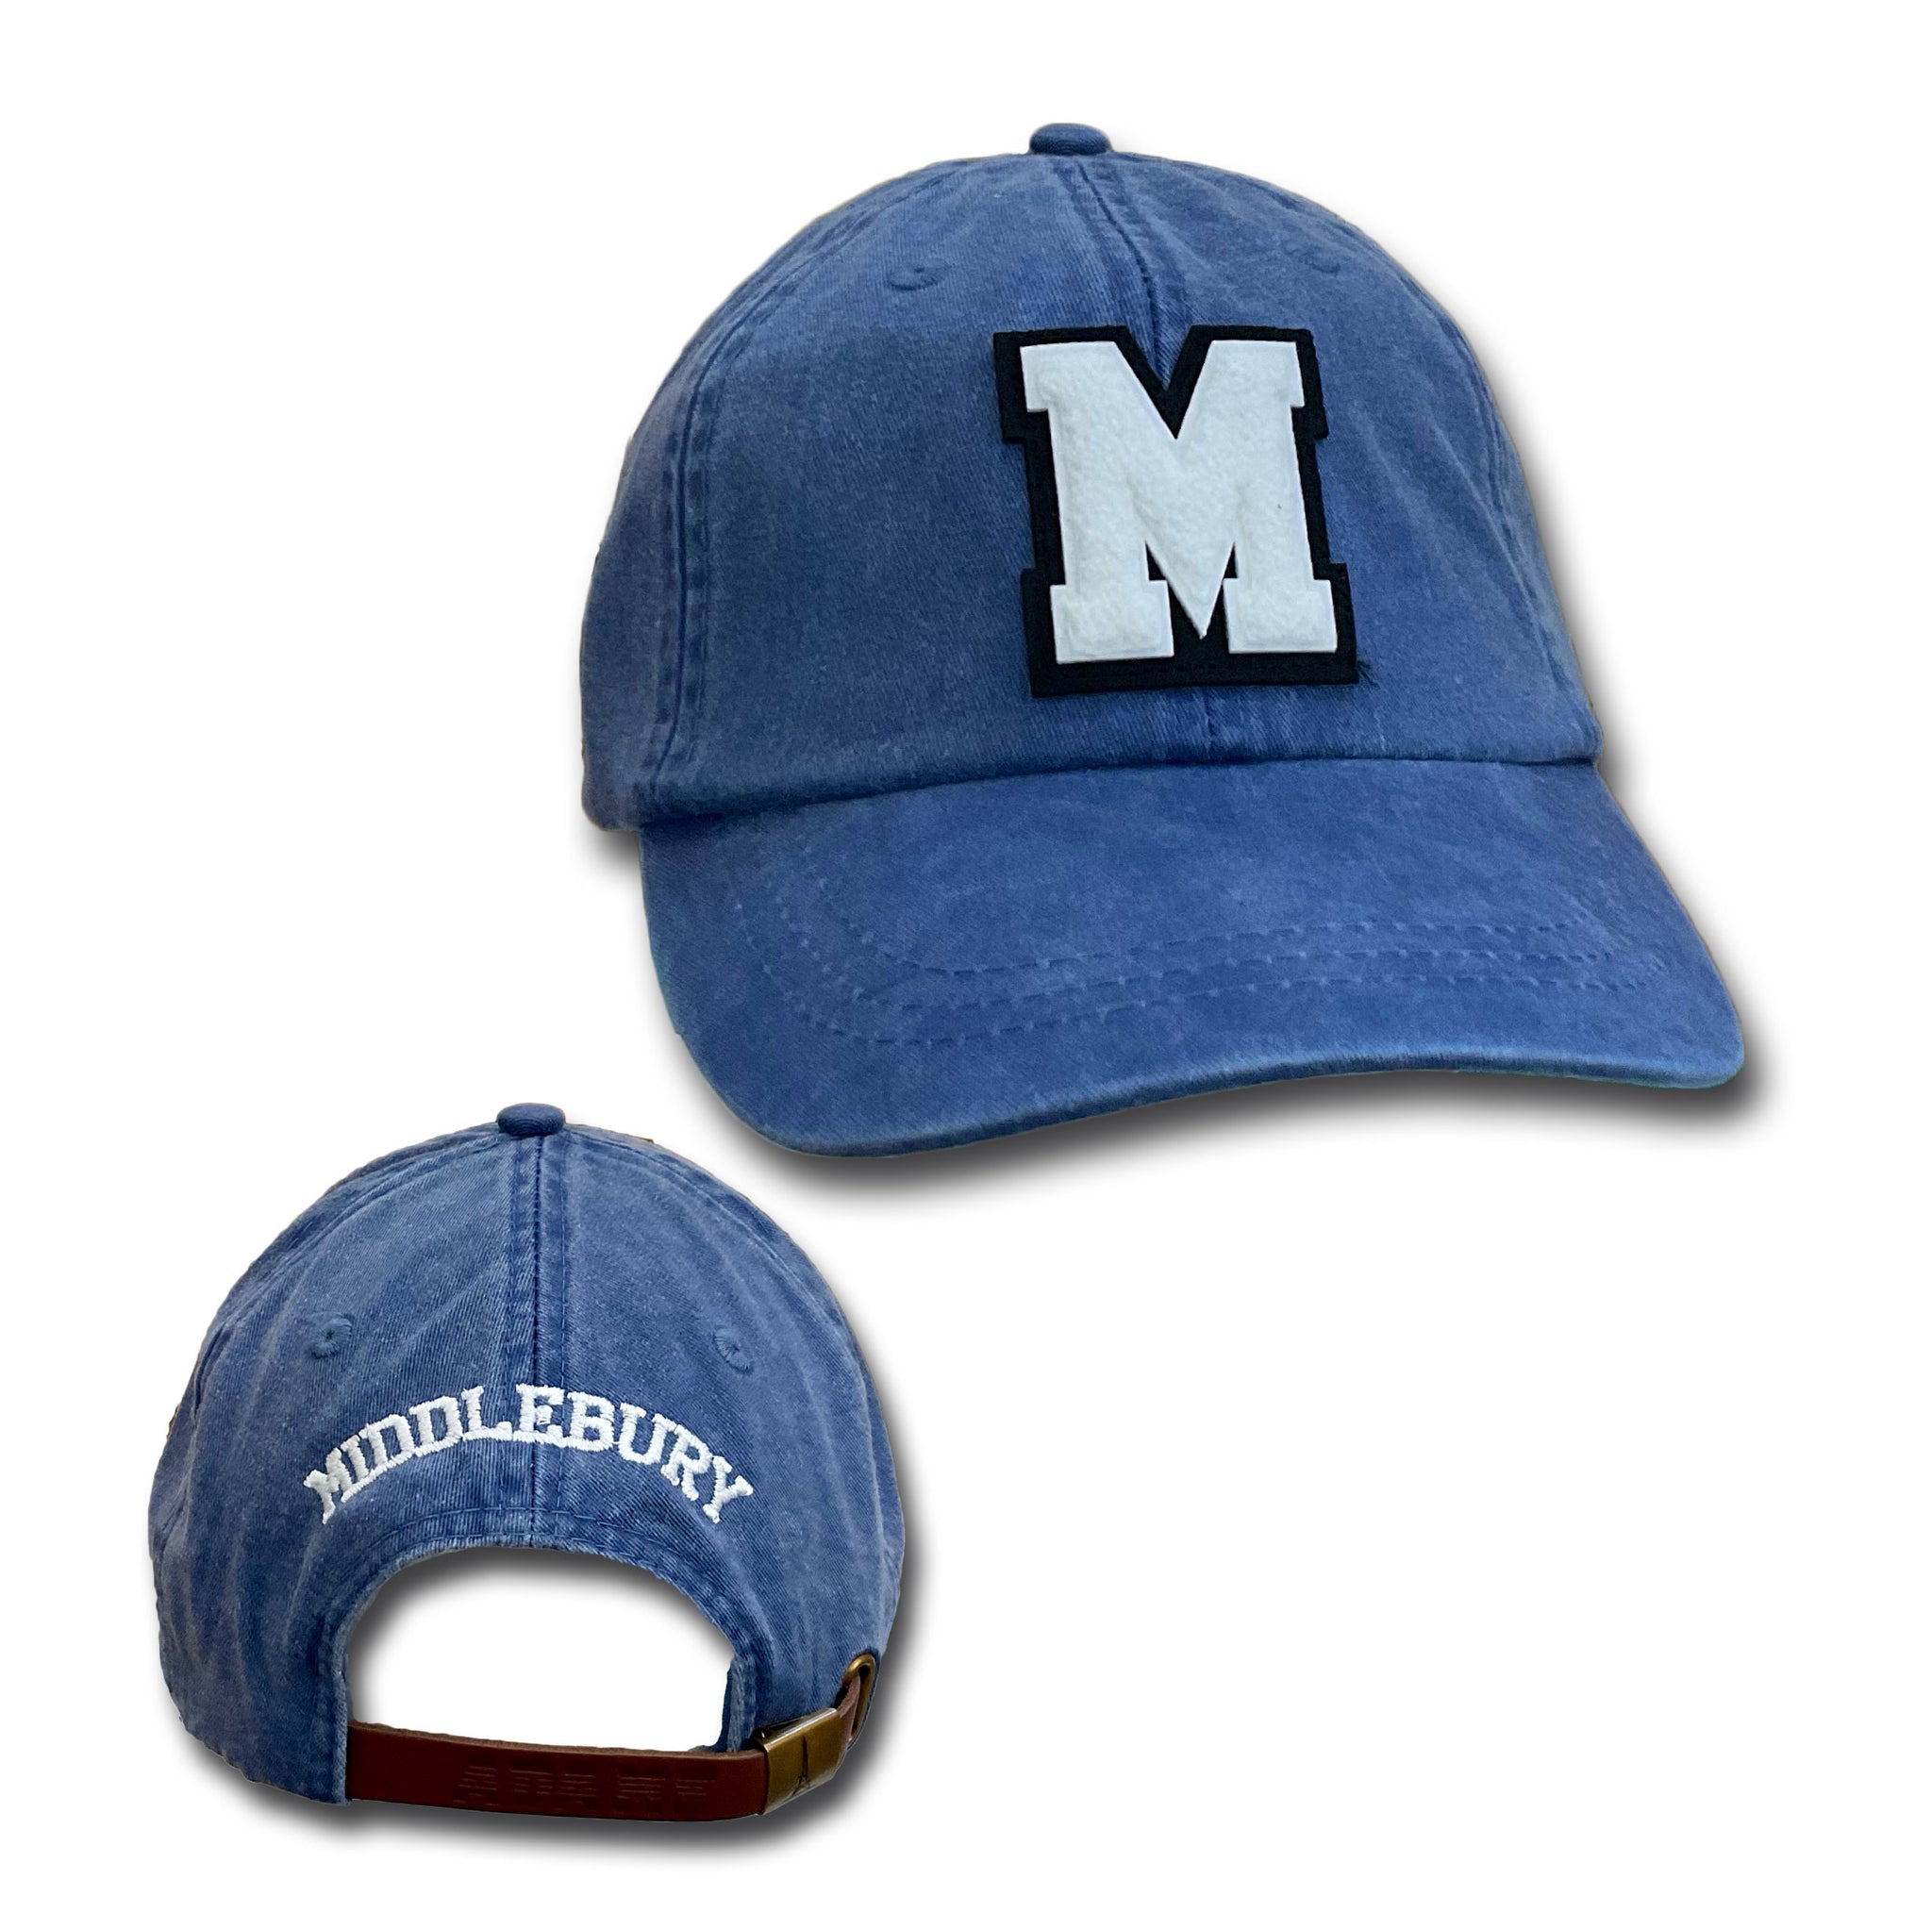 Middlebury Summer Hat (Royal Blue)